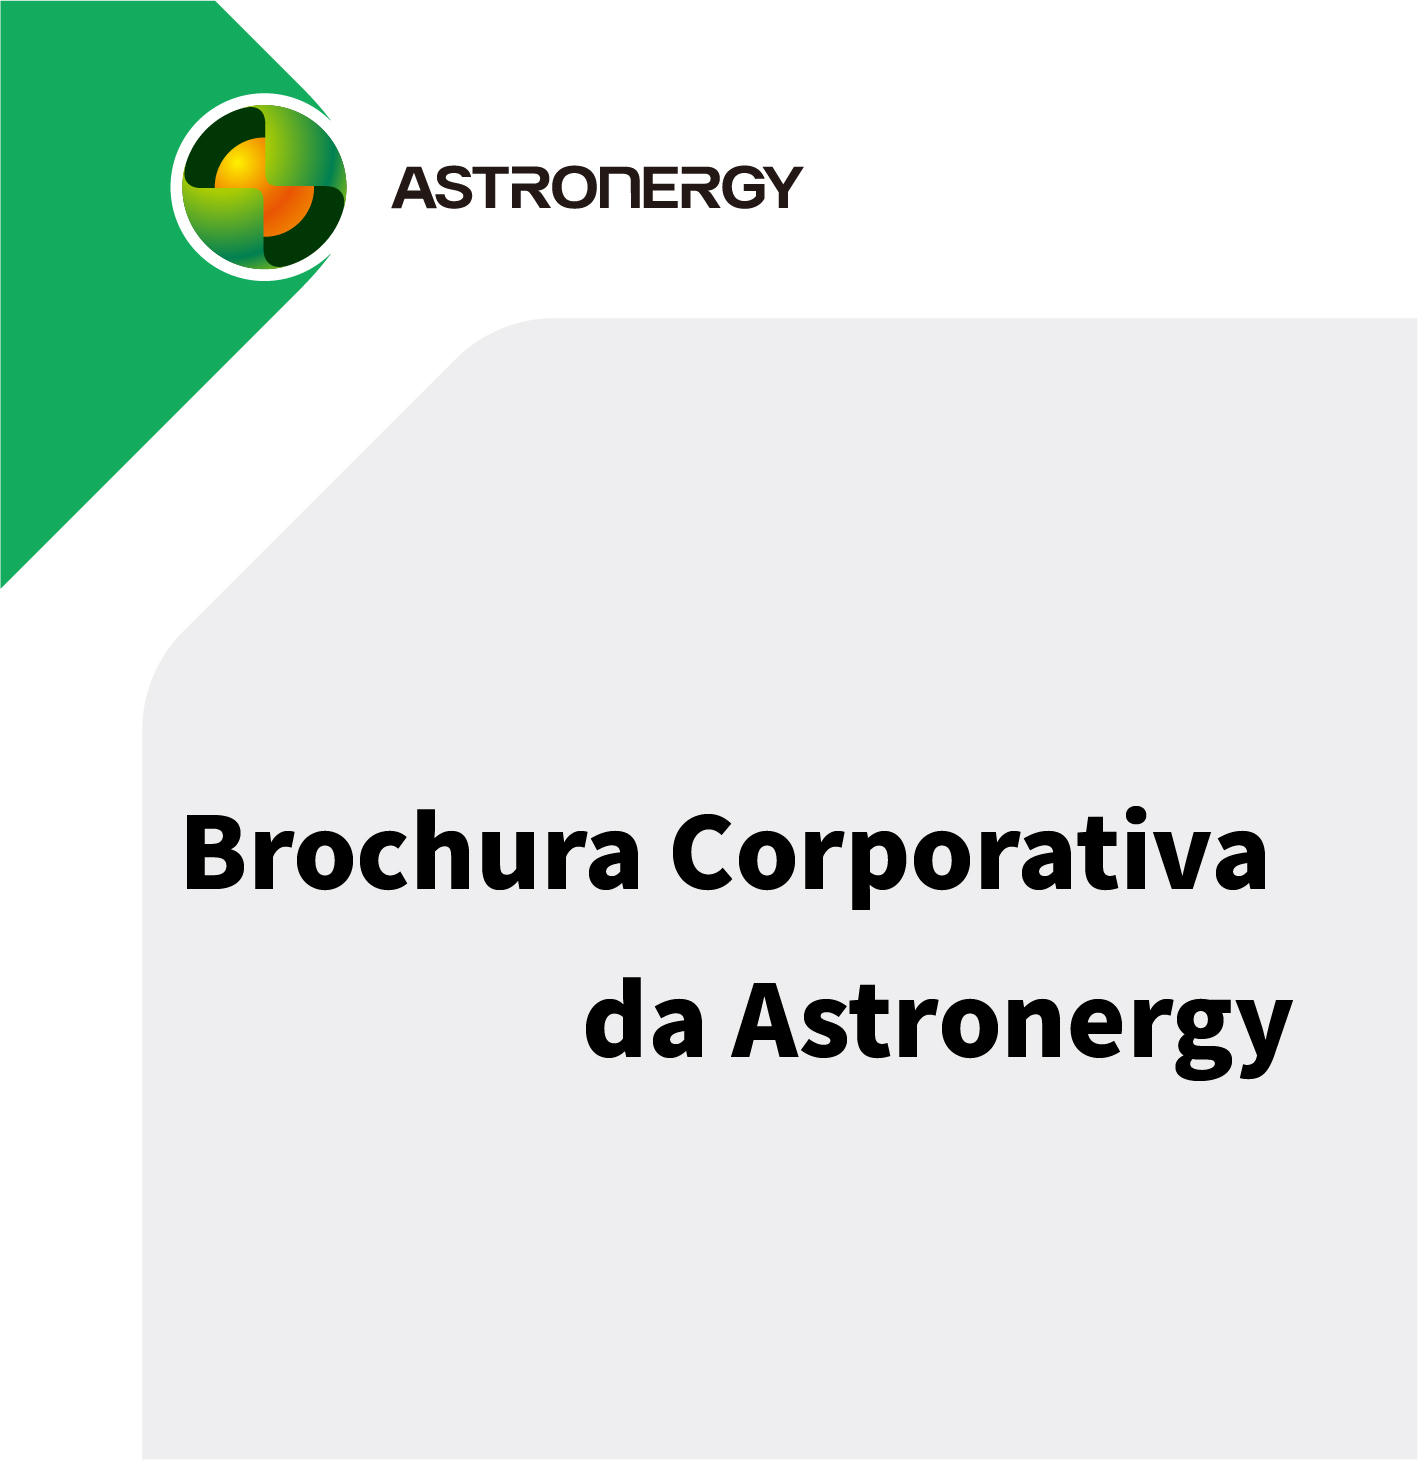 Brochura Corporativa da Astronergy